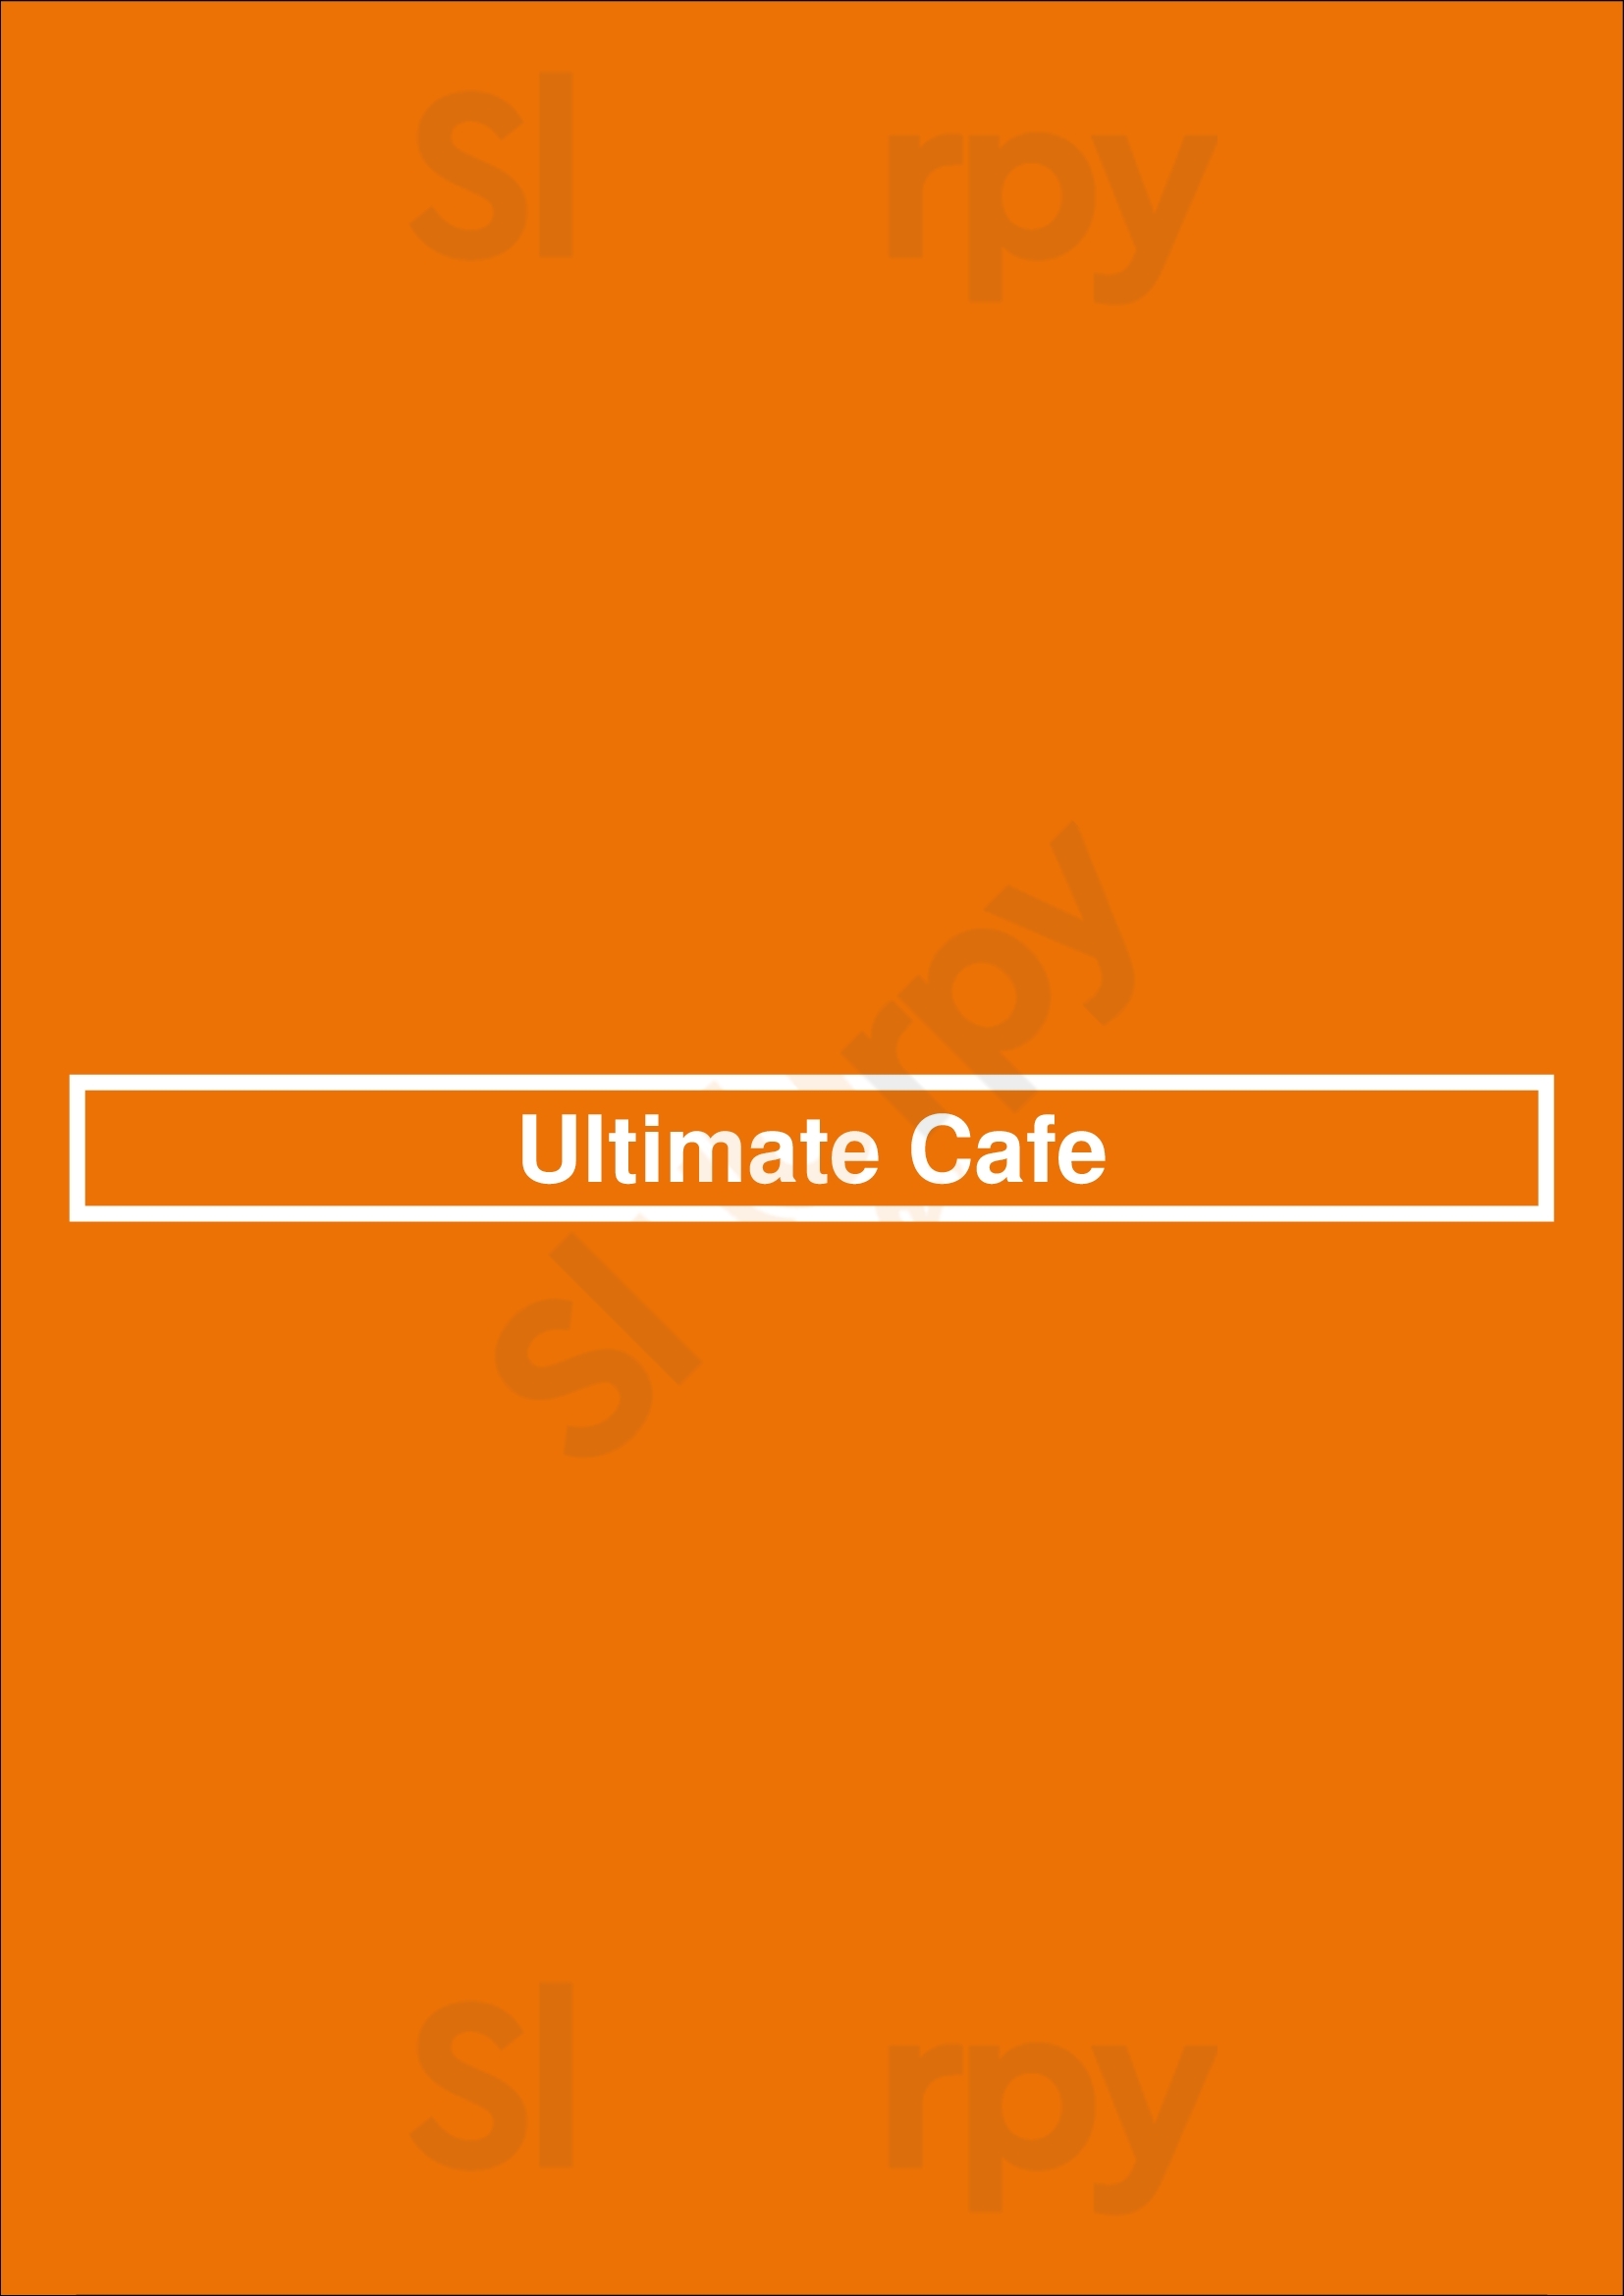 Ultimate Cafe Kingston upon Thames Menu - 1